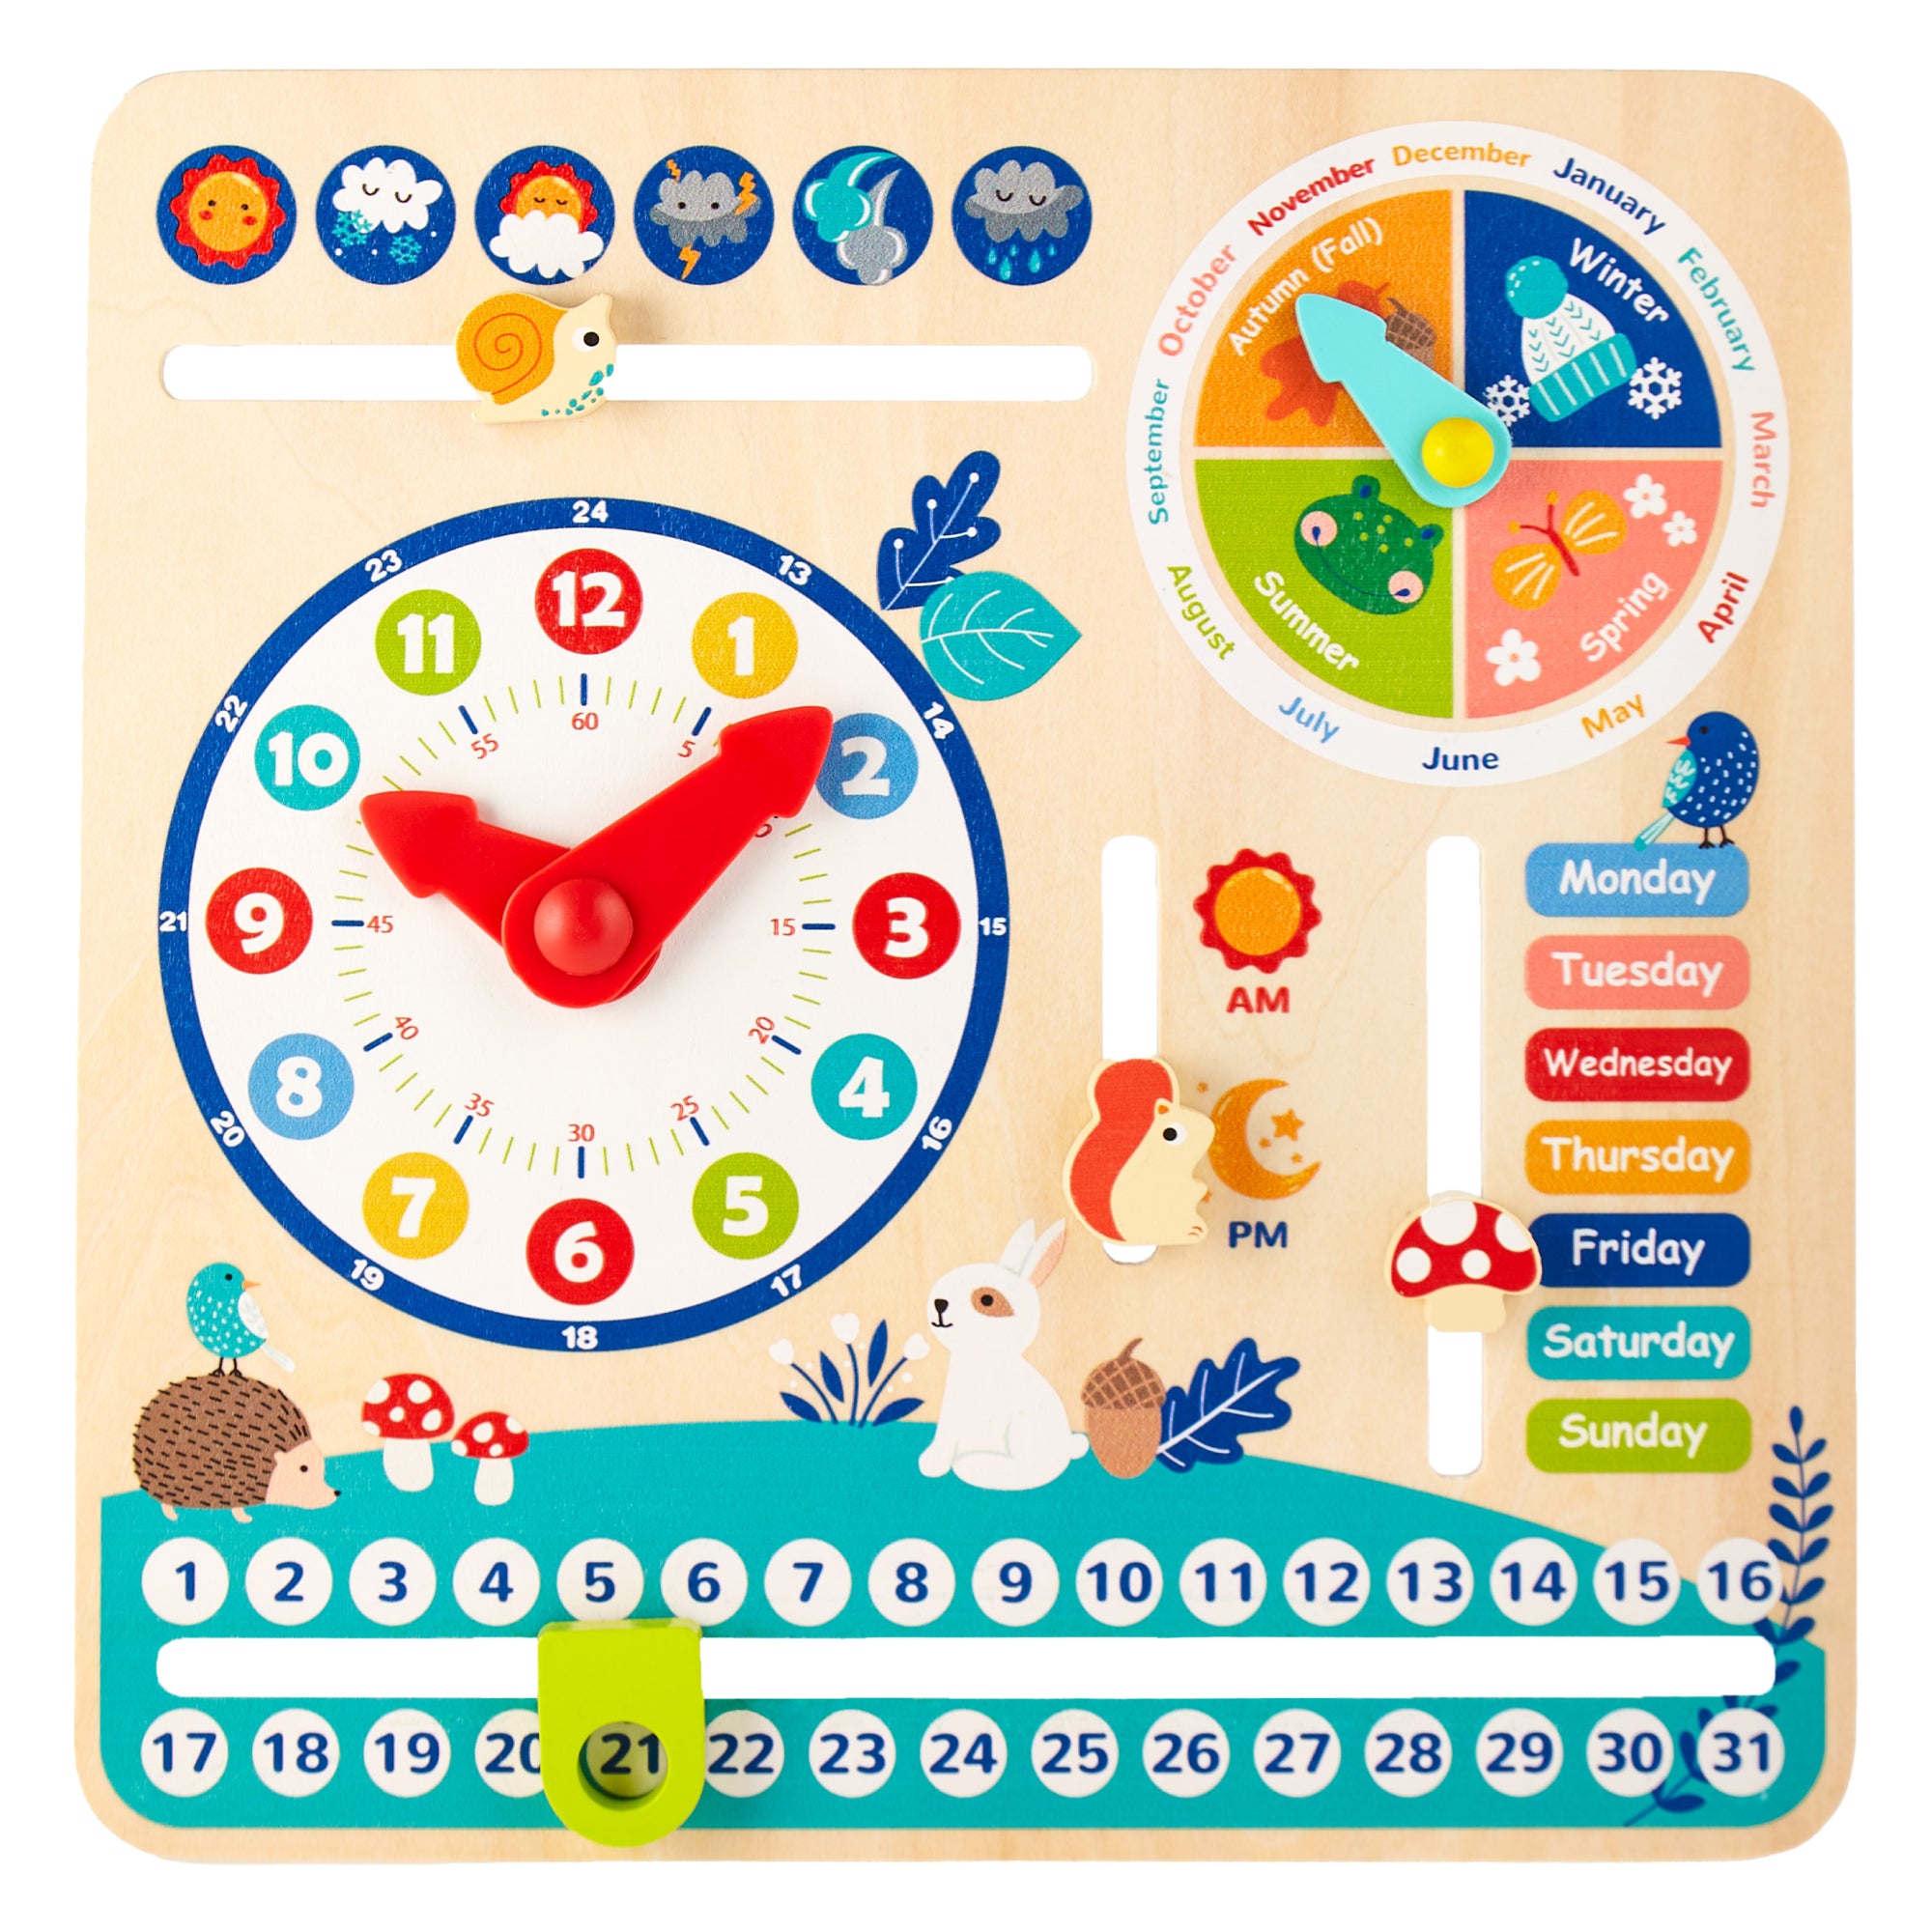 My Complete Calendar - Wood Montessori Learning Calendar for Kids